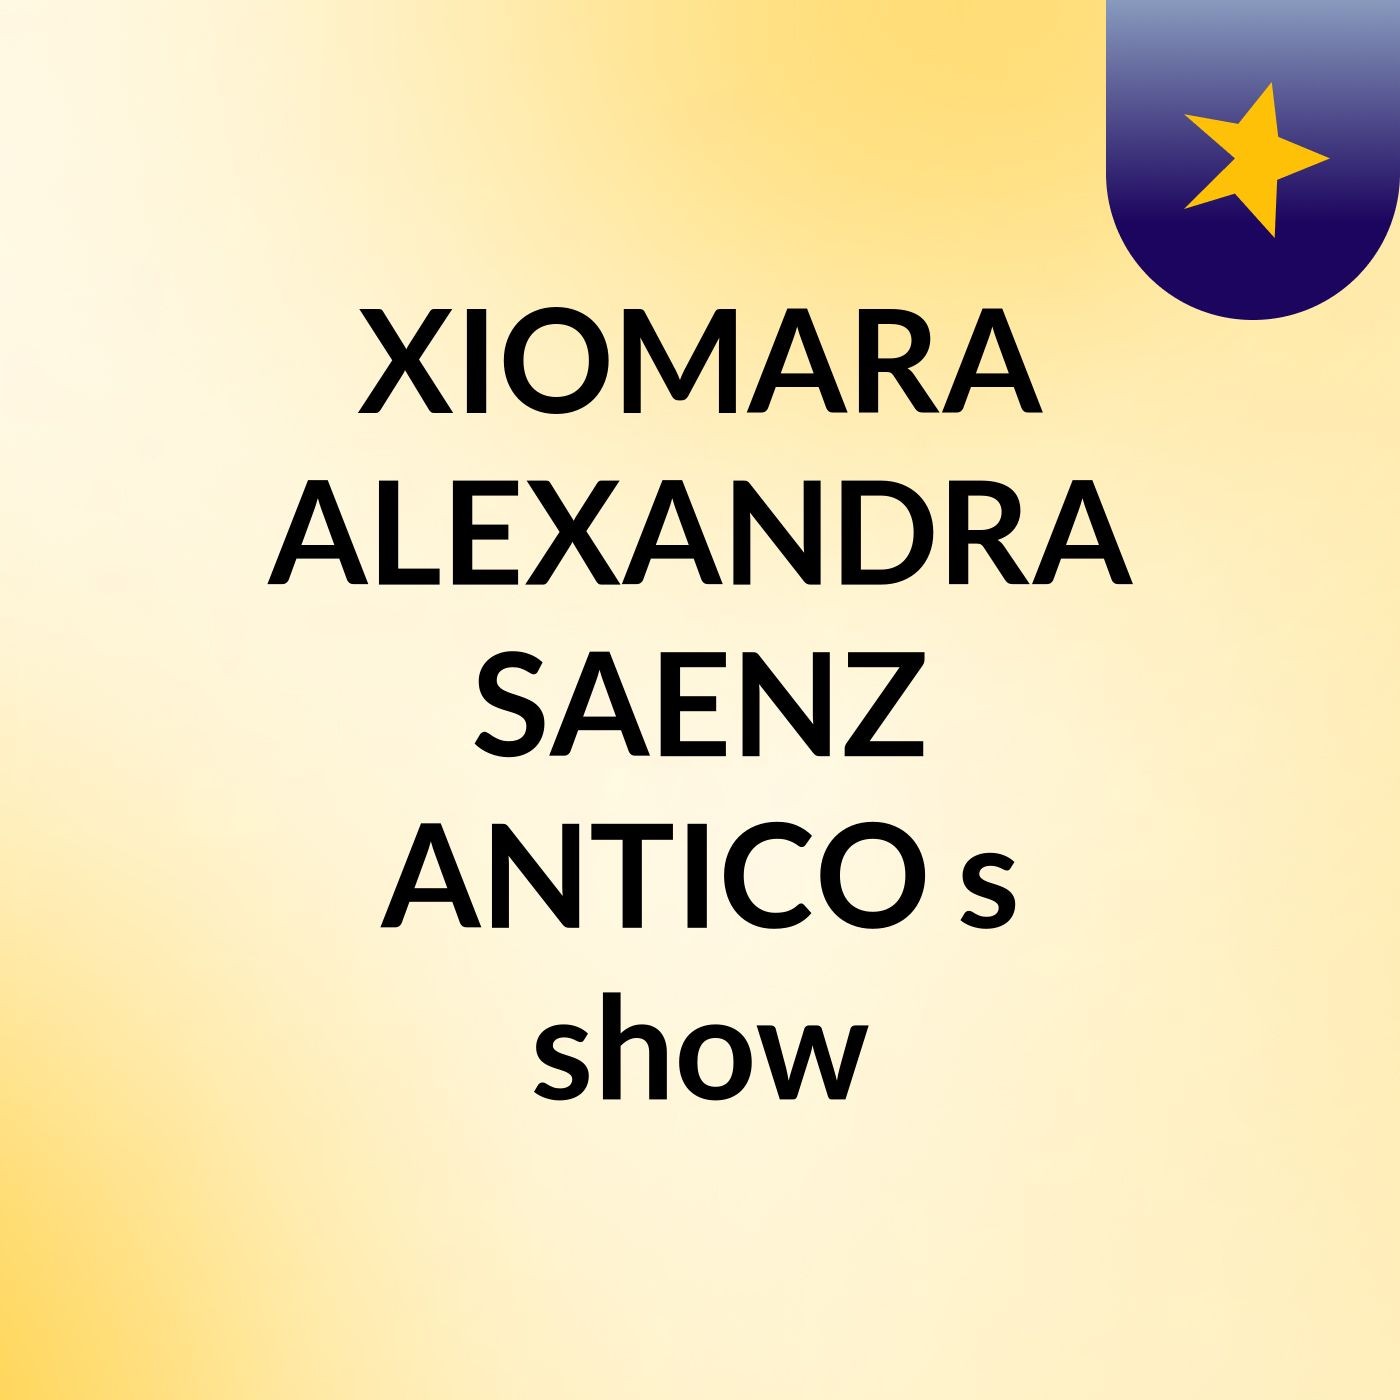 XIOMARA ALEXANDRA SAENZ ANTICO's show